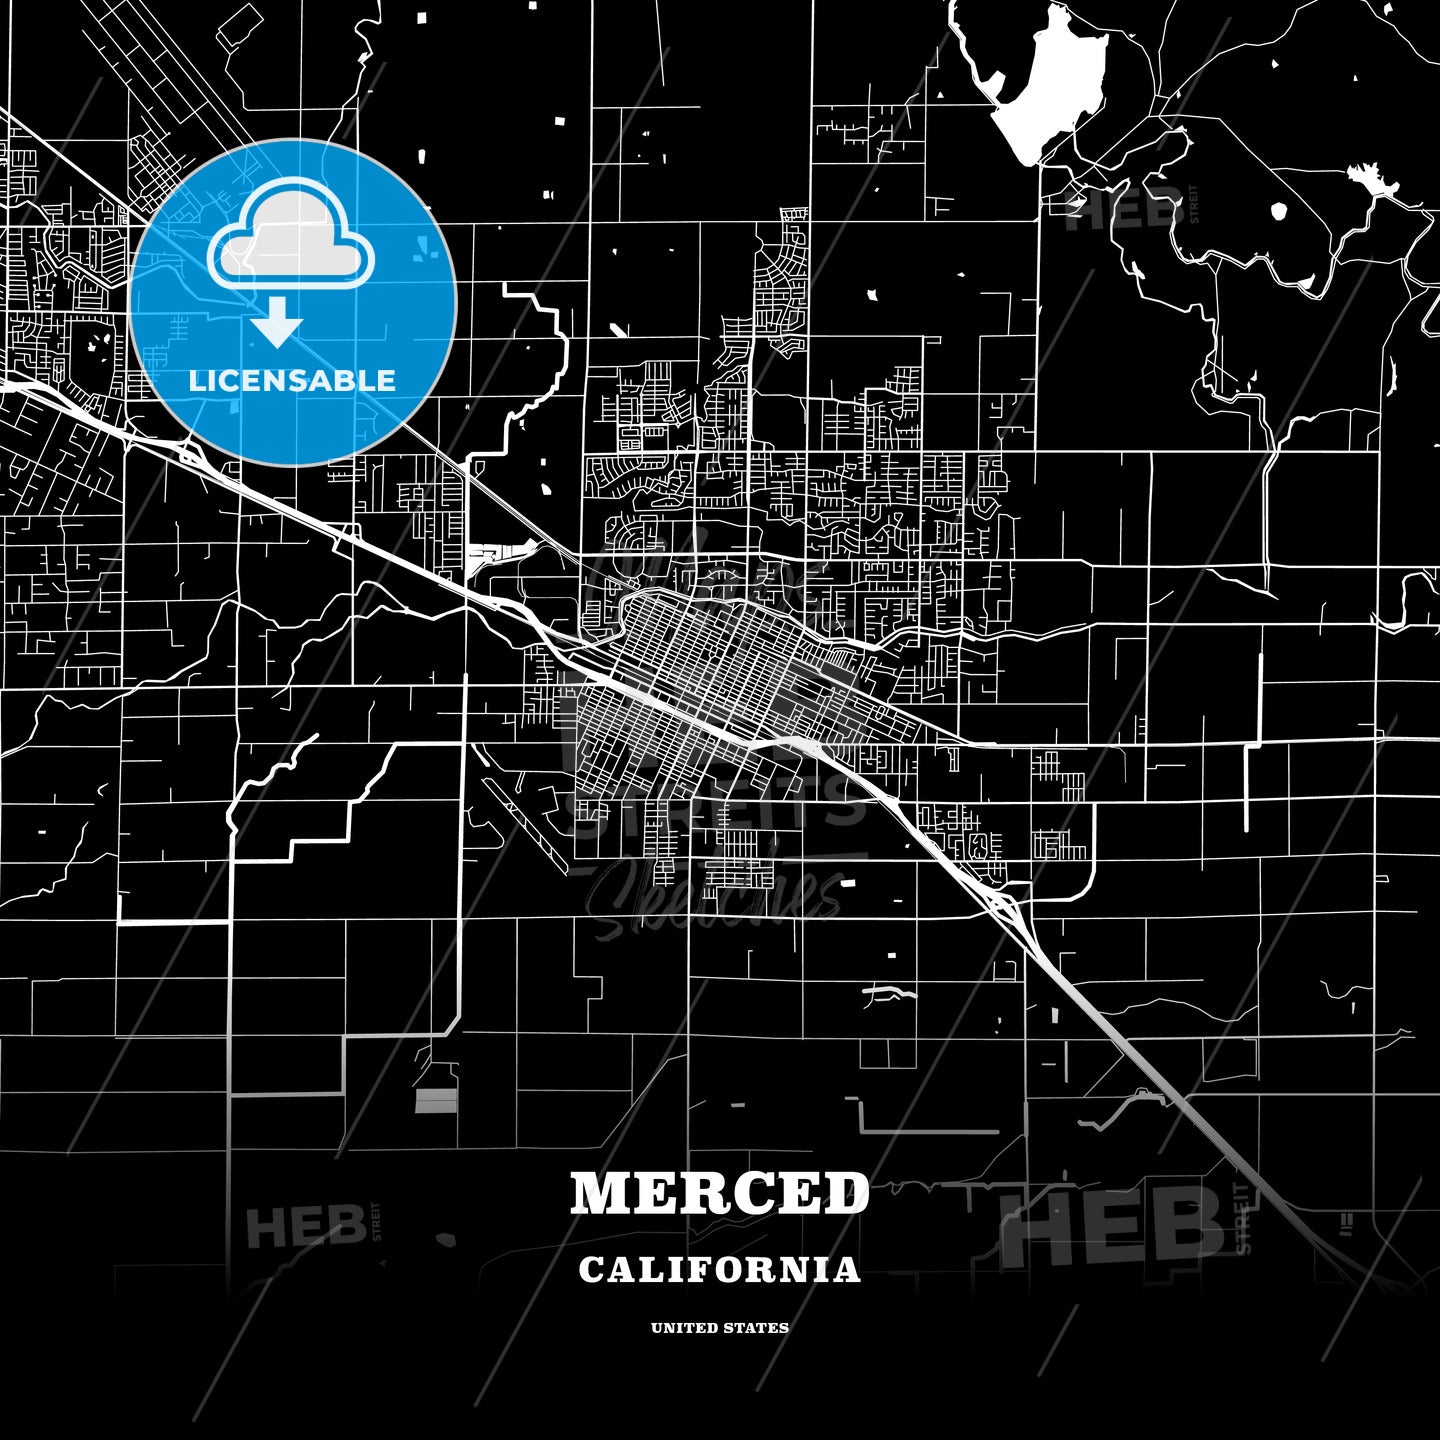 Merced, California, USA map